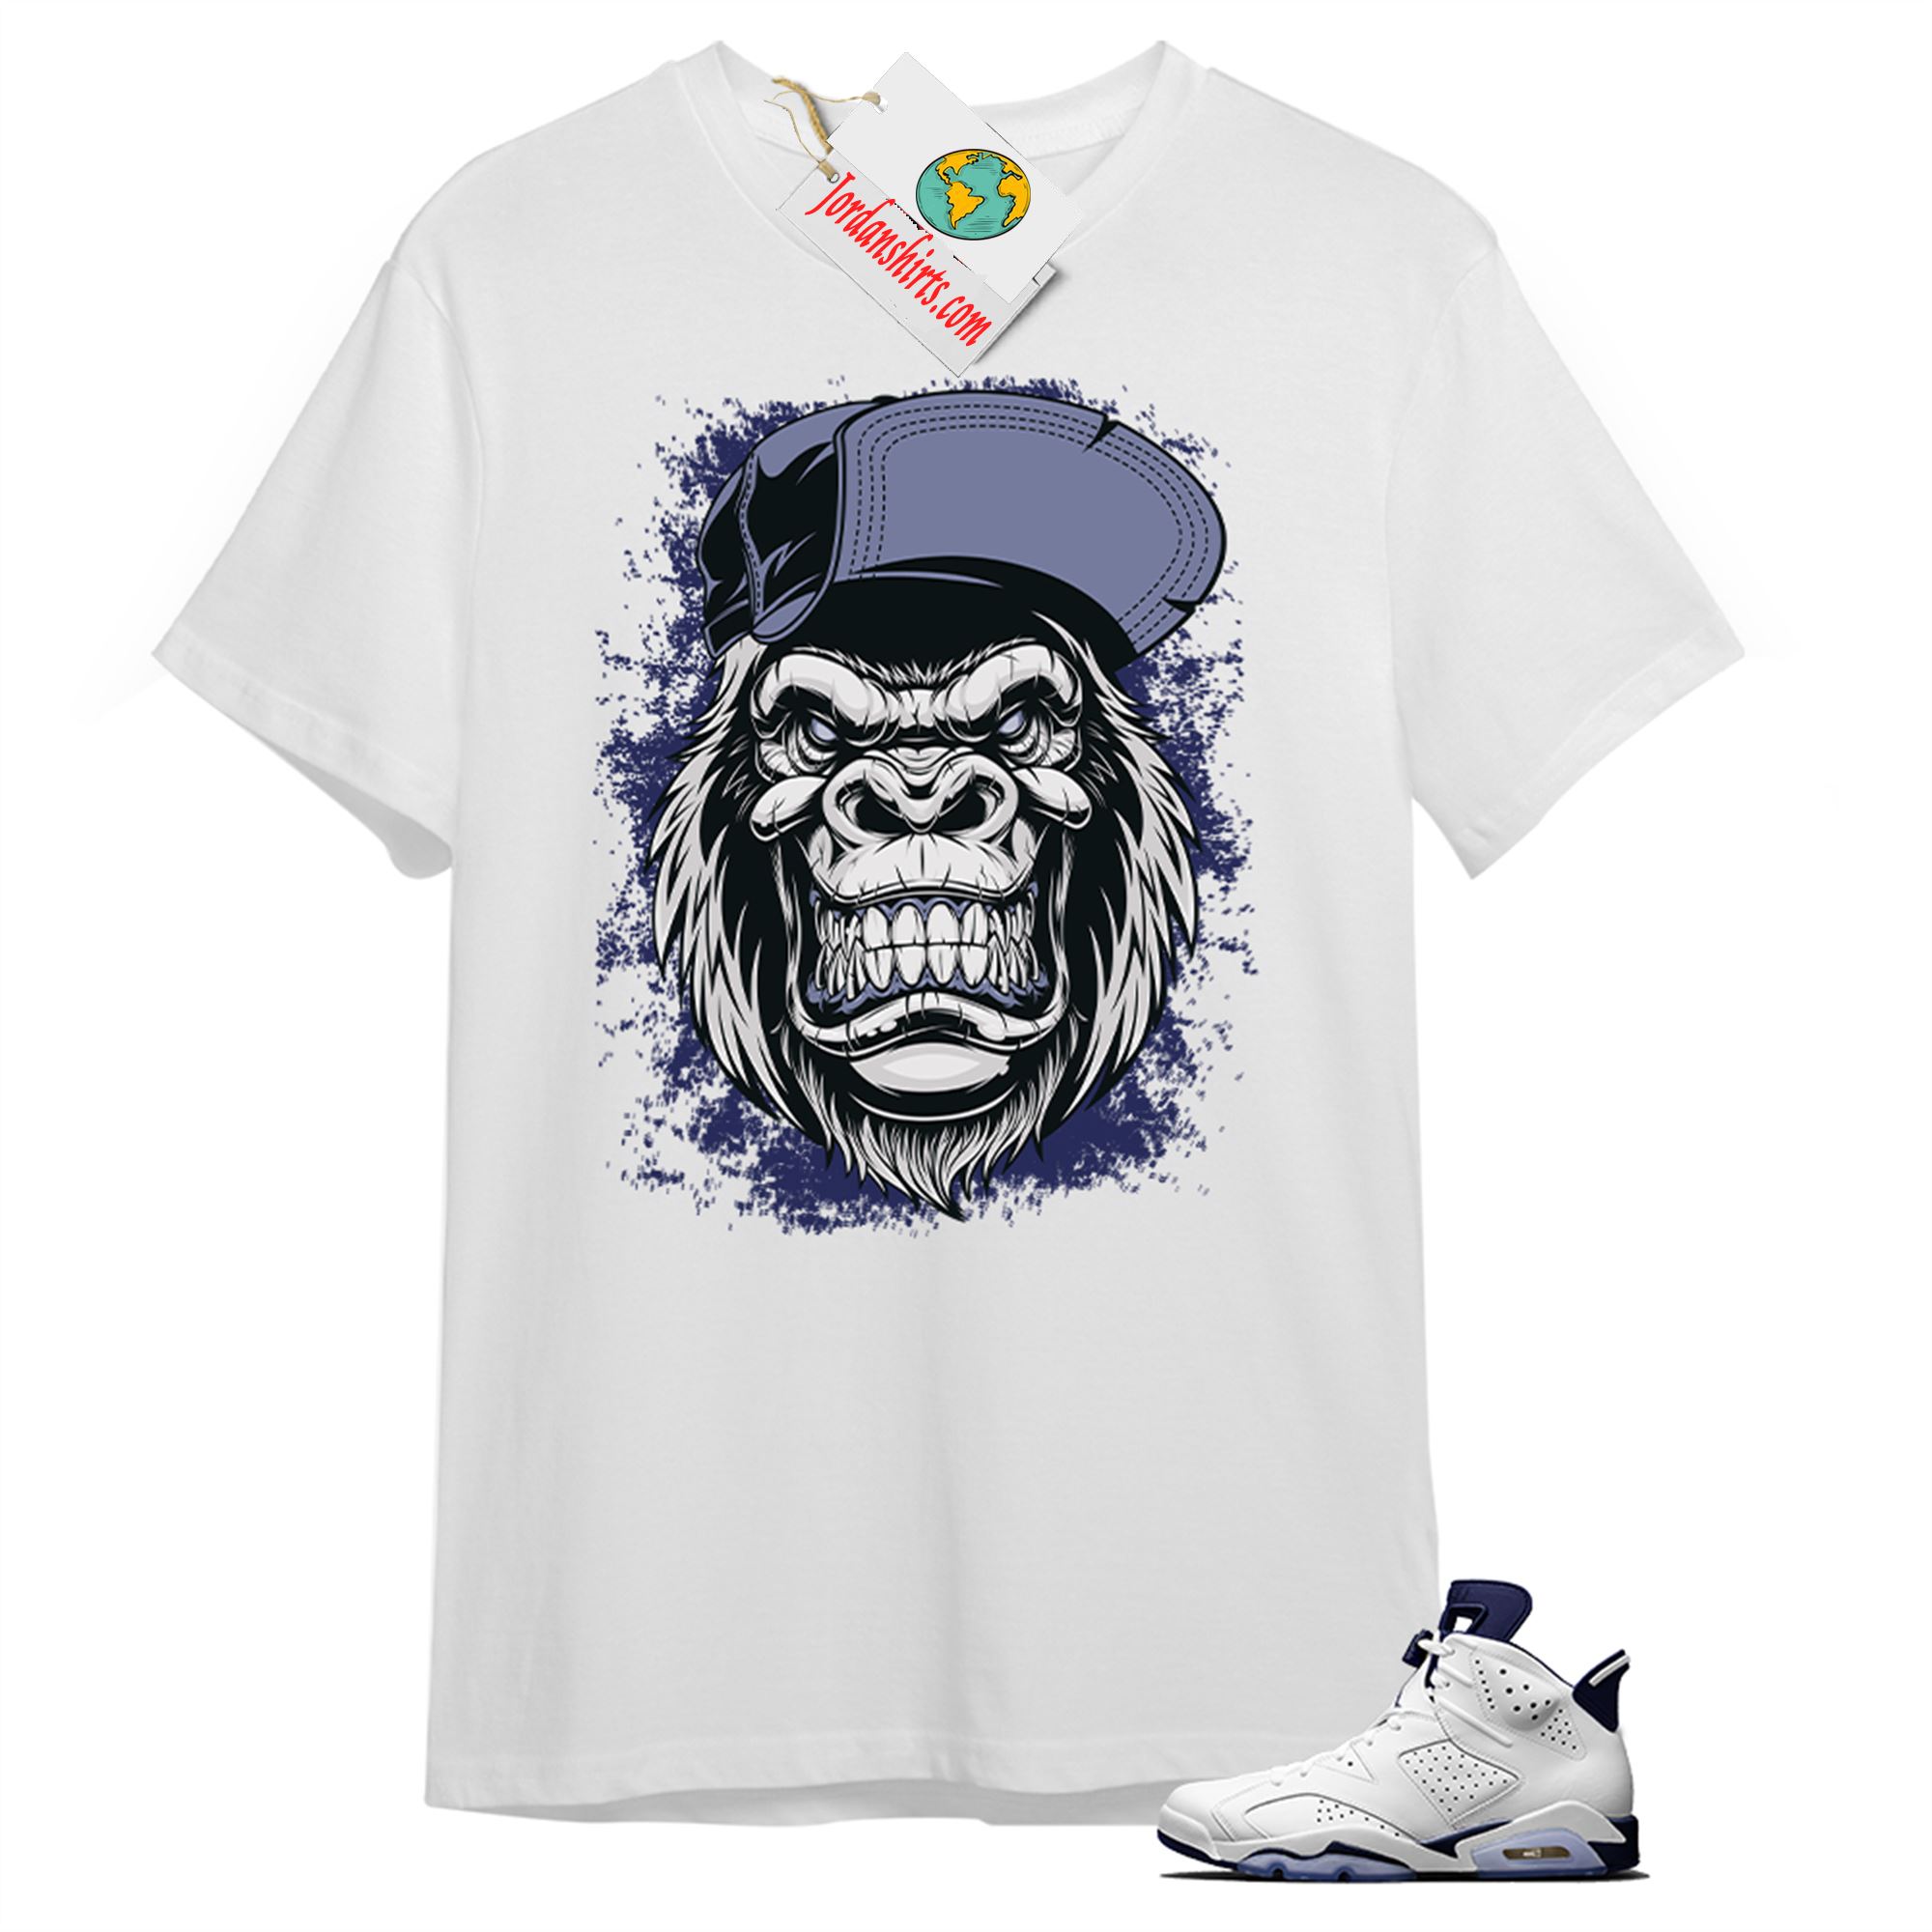 Jordan 6 Shirt, Ferocious Gorilla White T-shirt Air Jordan 6 Midnight Navy 6s Plus Size Up To 5xl